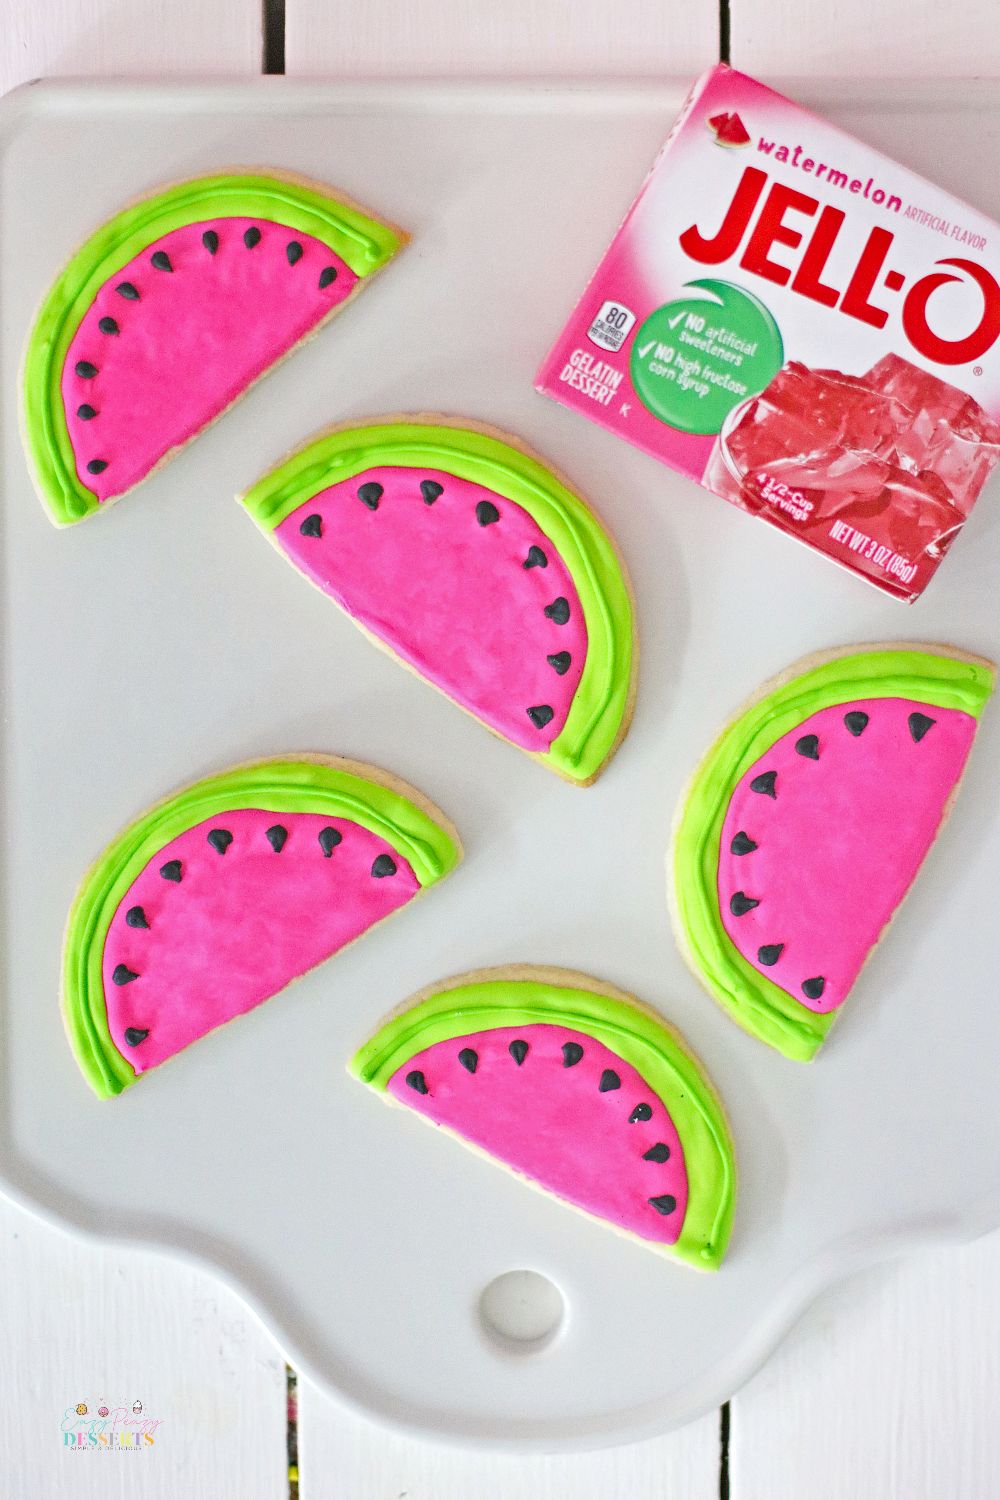 Watermelon shaped cookies